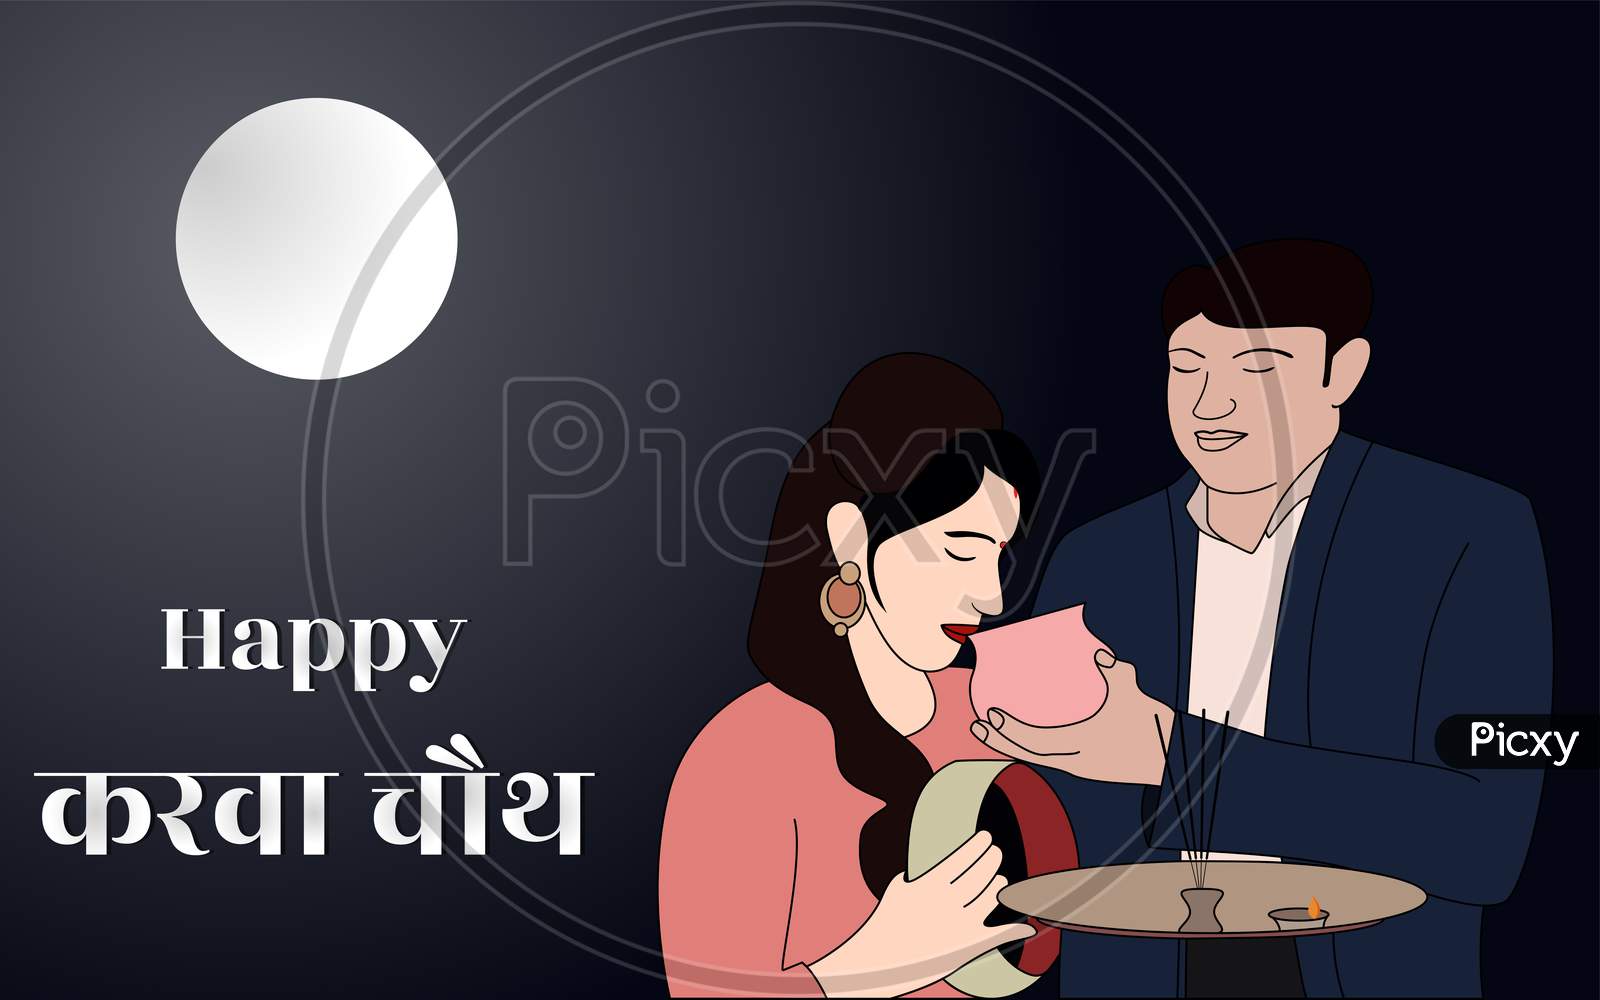 Happy Karwa Chauth Vector Illustration, A Couple Celebrating Karwa Chauth Under The Moonlight, Karwa Chauth Celebration Vector Illustration.